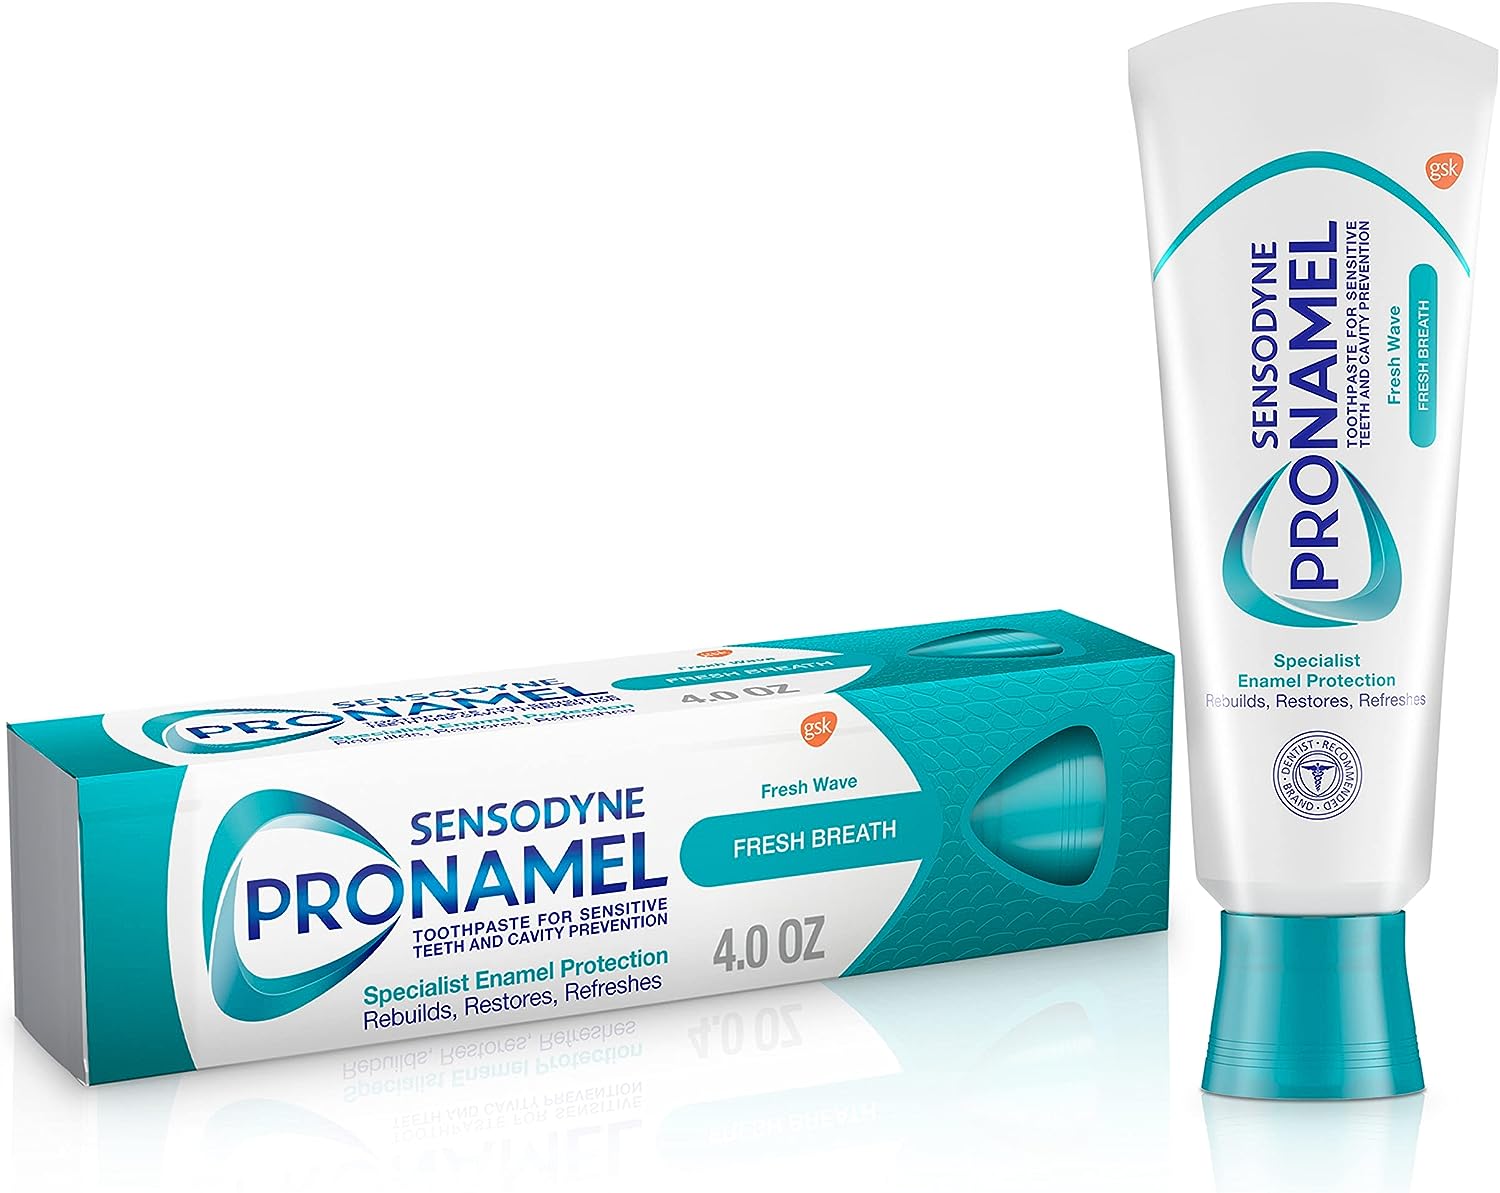 Sensodyne Pronamel Fresh Breath Enamel Toothpaste for Sensitive Teeth and Cavity Protection, Sensitivity Protection and Cavity Protection, Fresh Wave - 4 Ounces, only $4.35